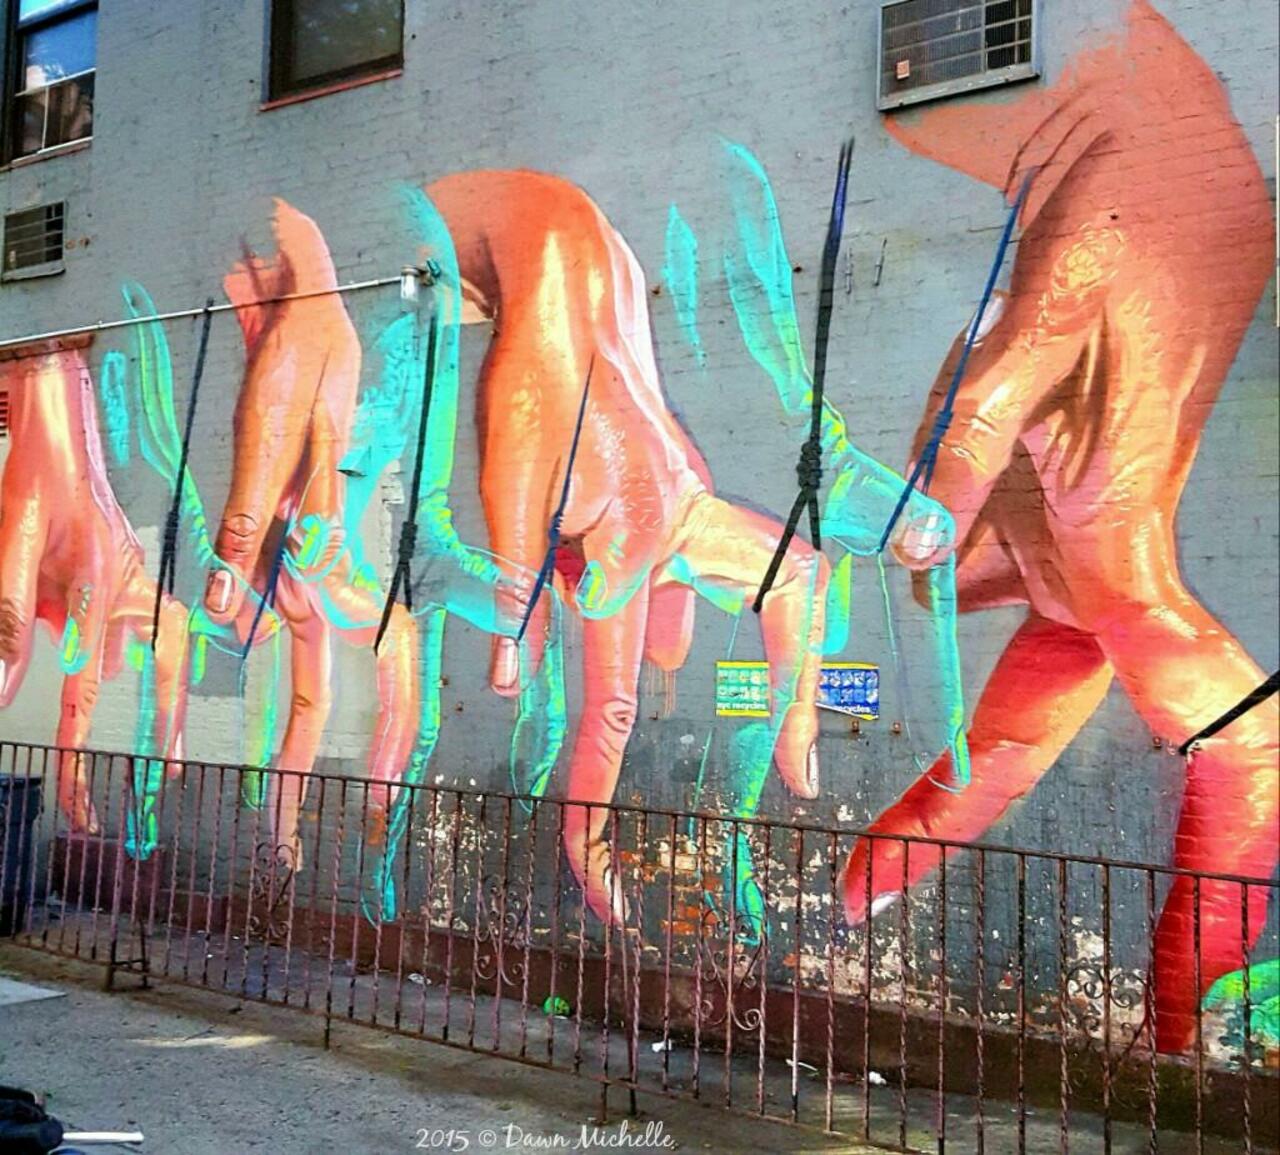 RT @cullin738: By @case_maclaim #nyc #streetart #graffiti #graff #art @globalgraff @circumjacent @MadeInManchestr @GraffitiFeed https://t.co/mdMBWrb8YR